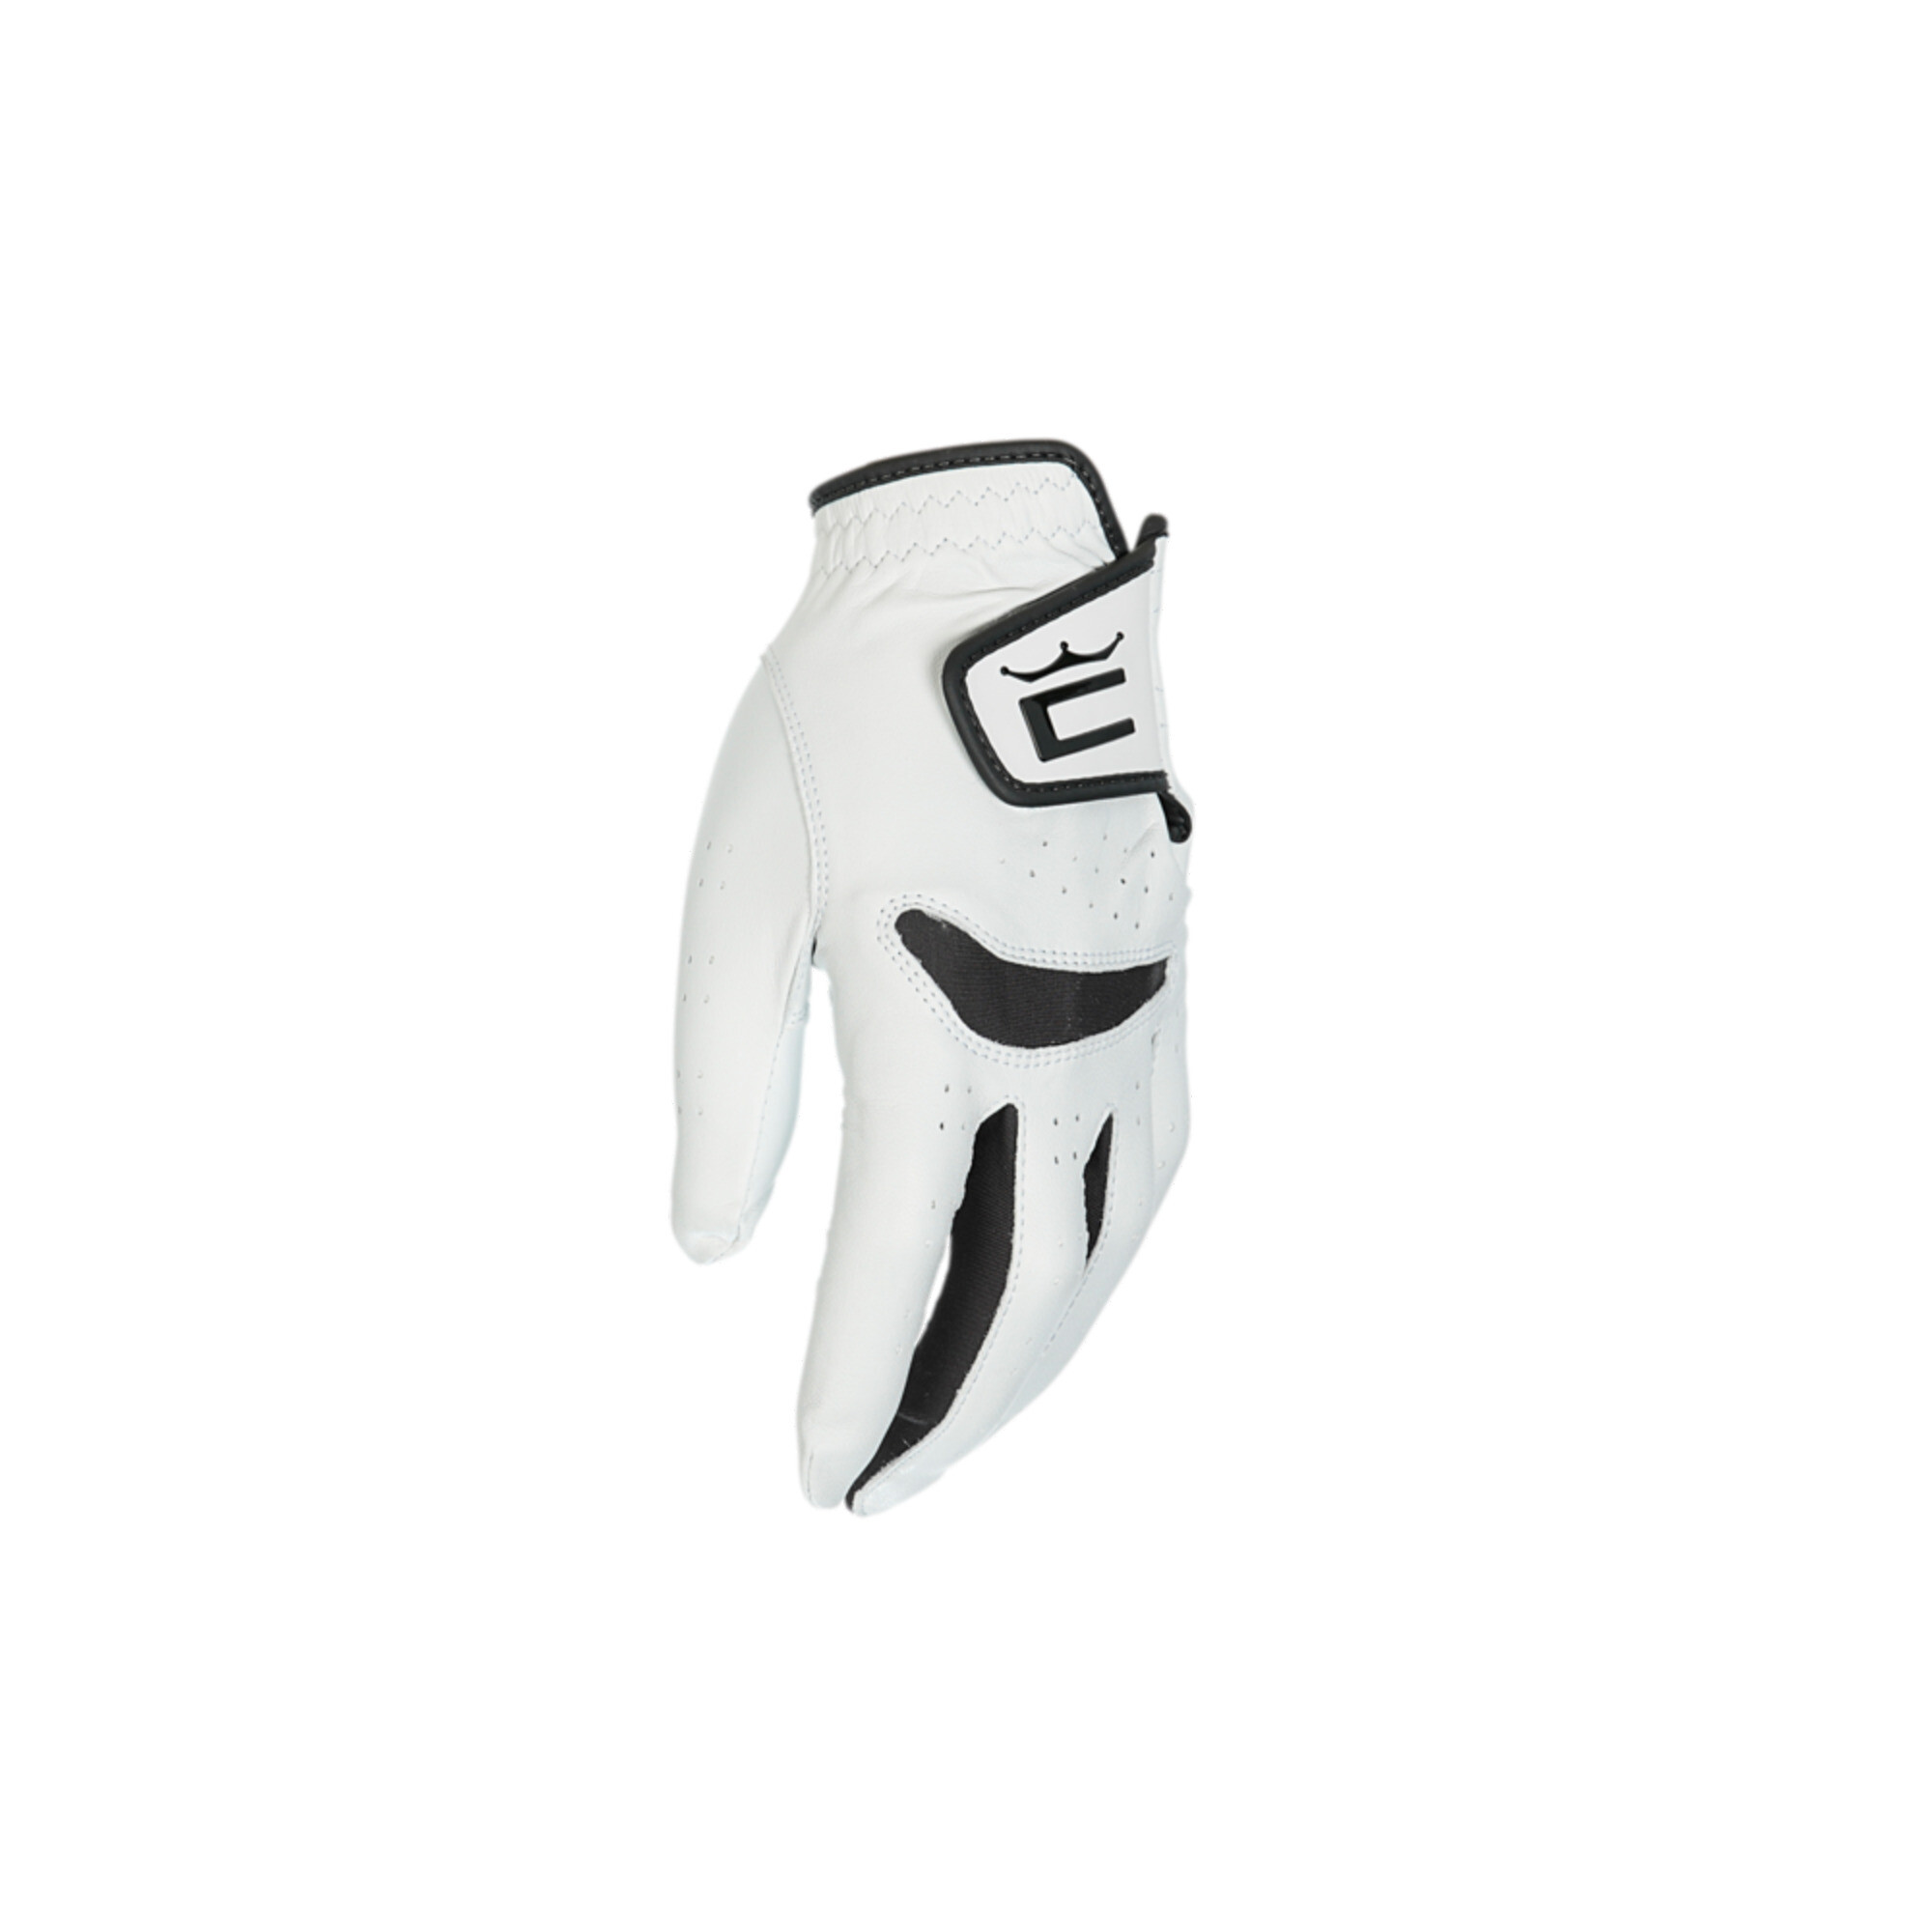 Men's Puma Pur Tech's Left Hand Golf Glove, White, Size M/L, Accessories